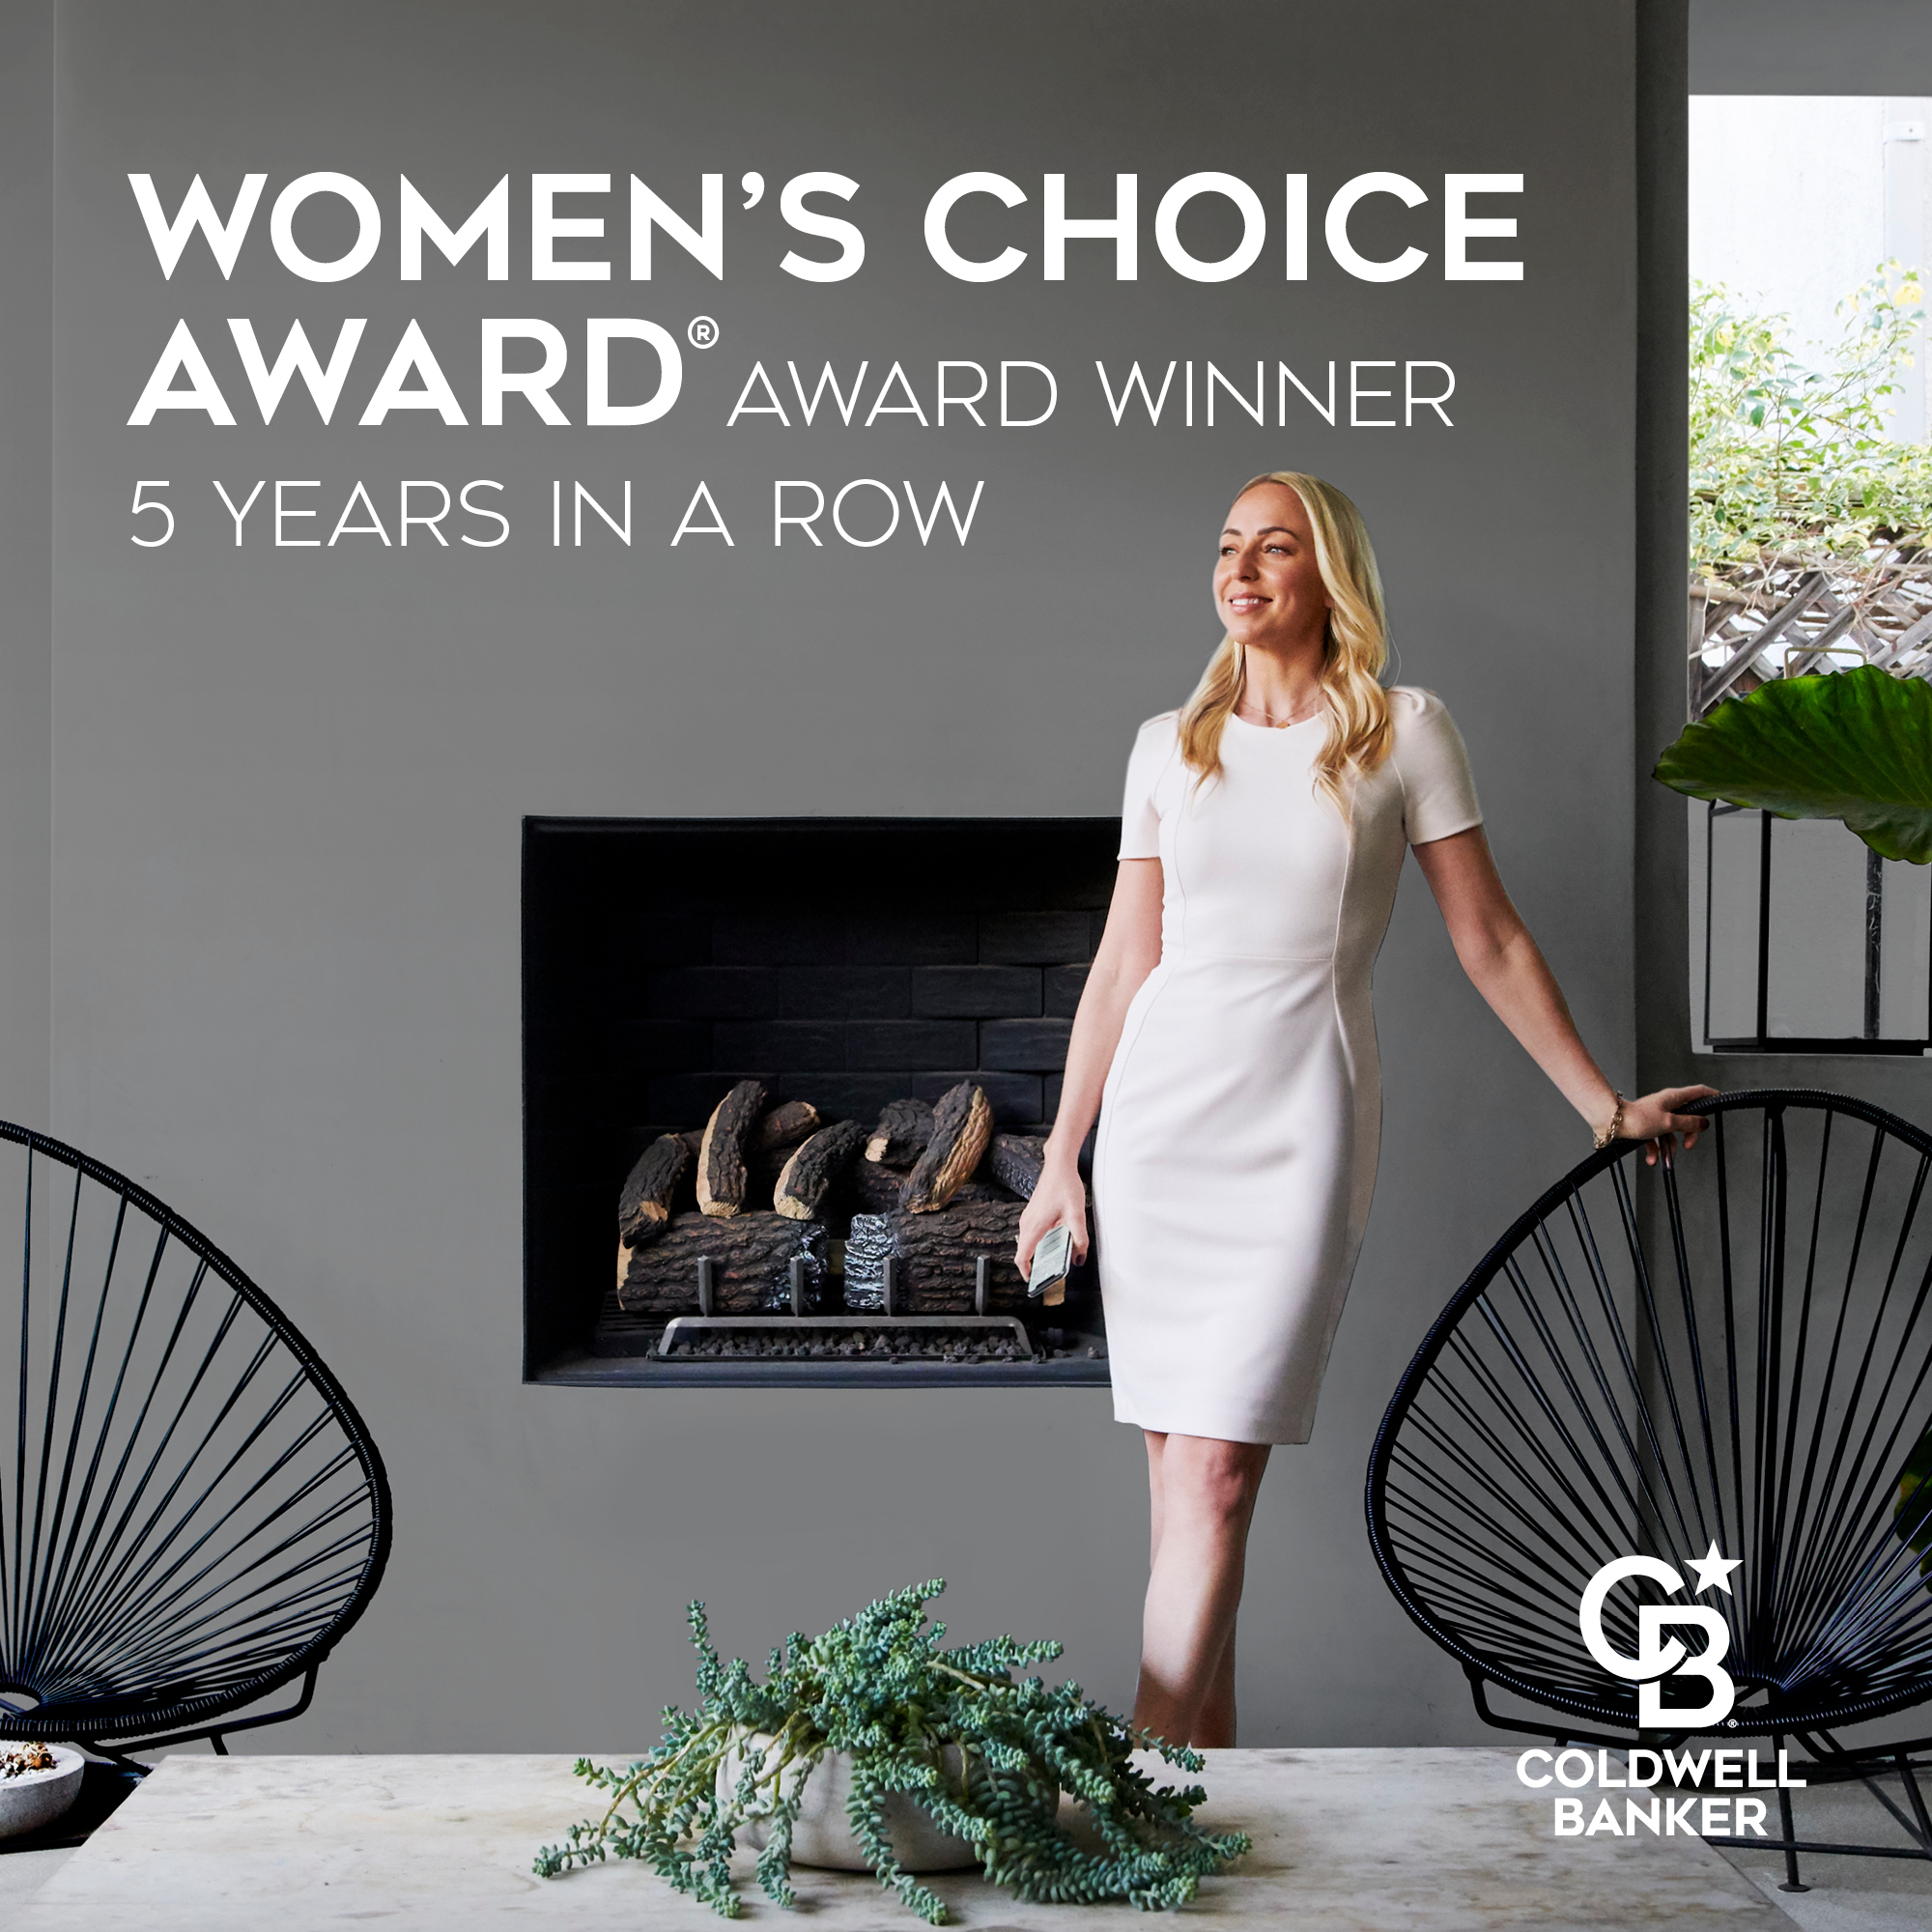 Women's Choice Award Winner 5 Years in a Row